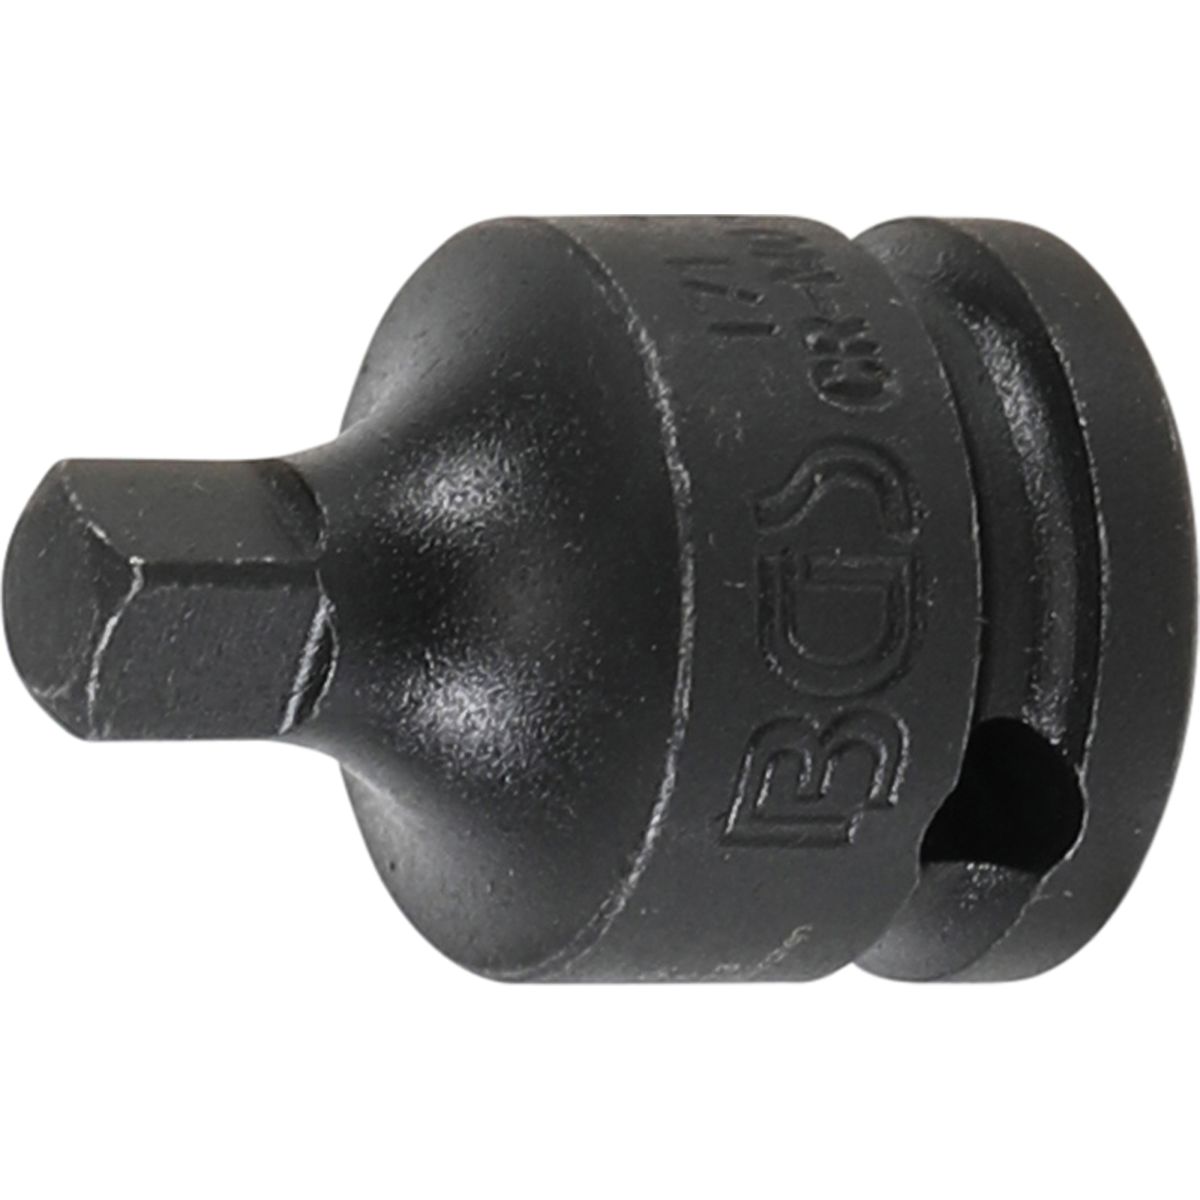 Kraft-Steckschlüssel-Adapter | Innenvierkant 10 mm (3/8") - Außenvierkant 6,3 mm (1/4")